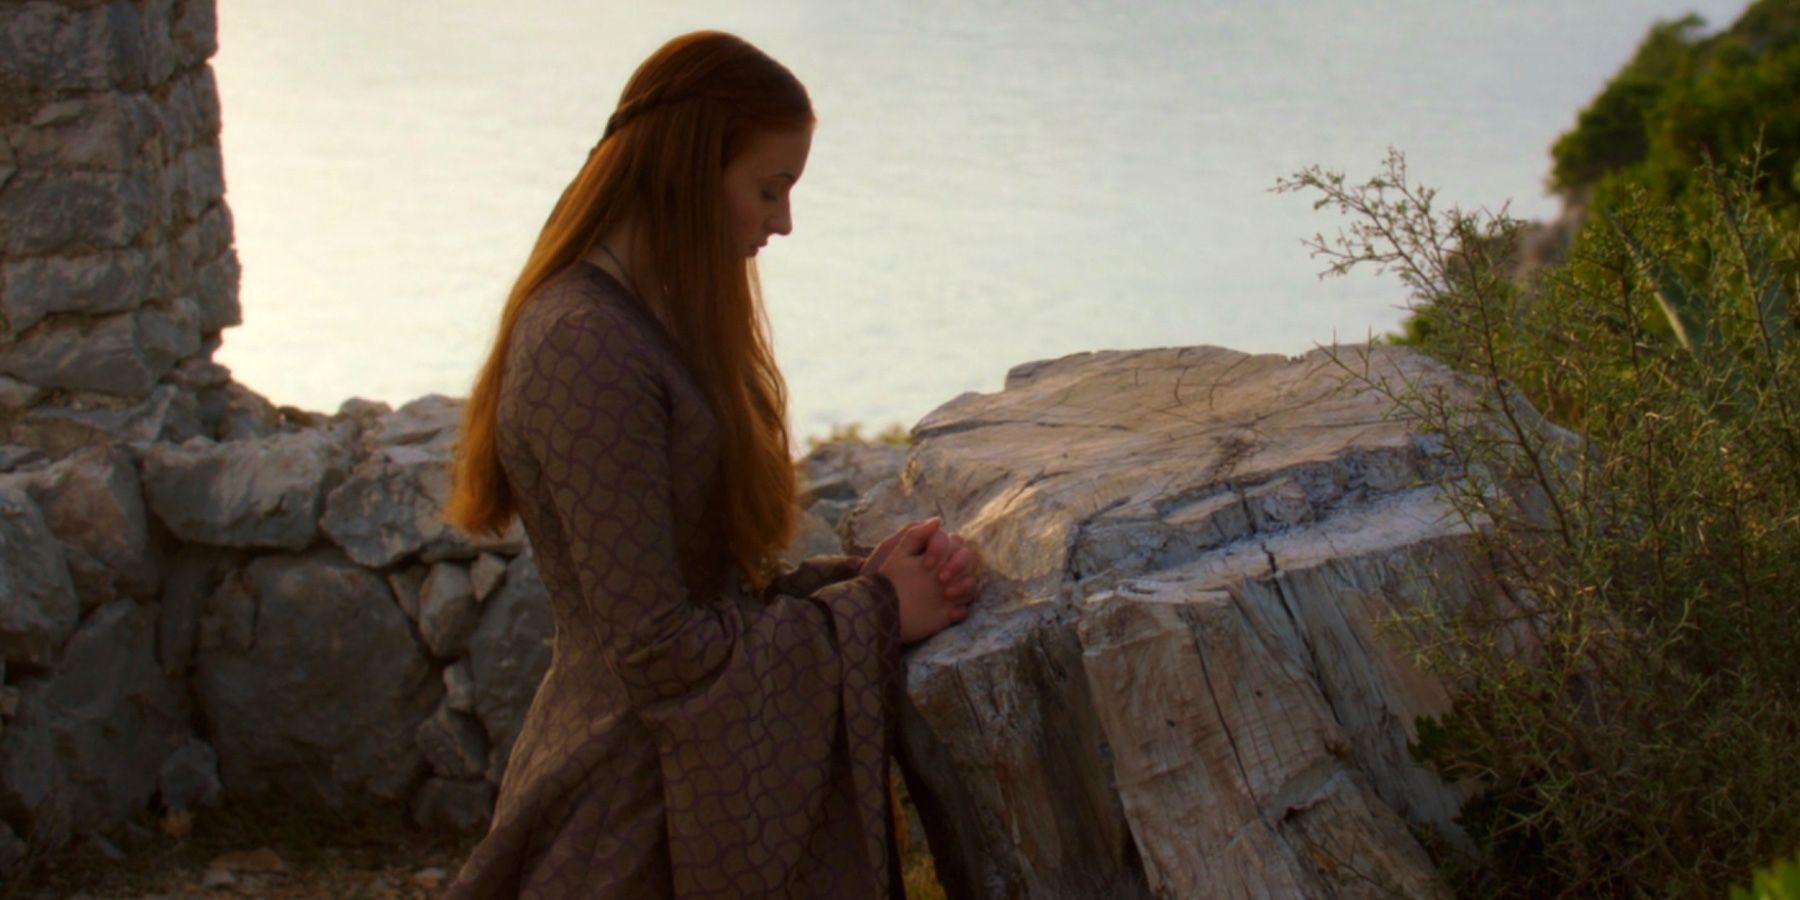 Sansa prays on a cut weir wood tree in Game of Thrones